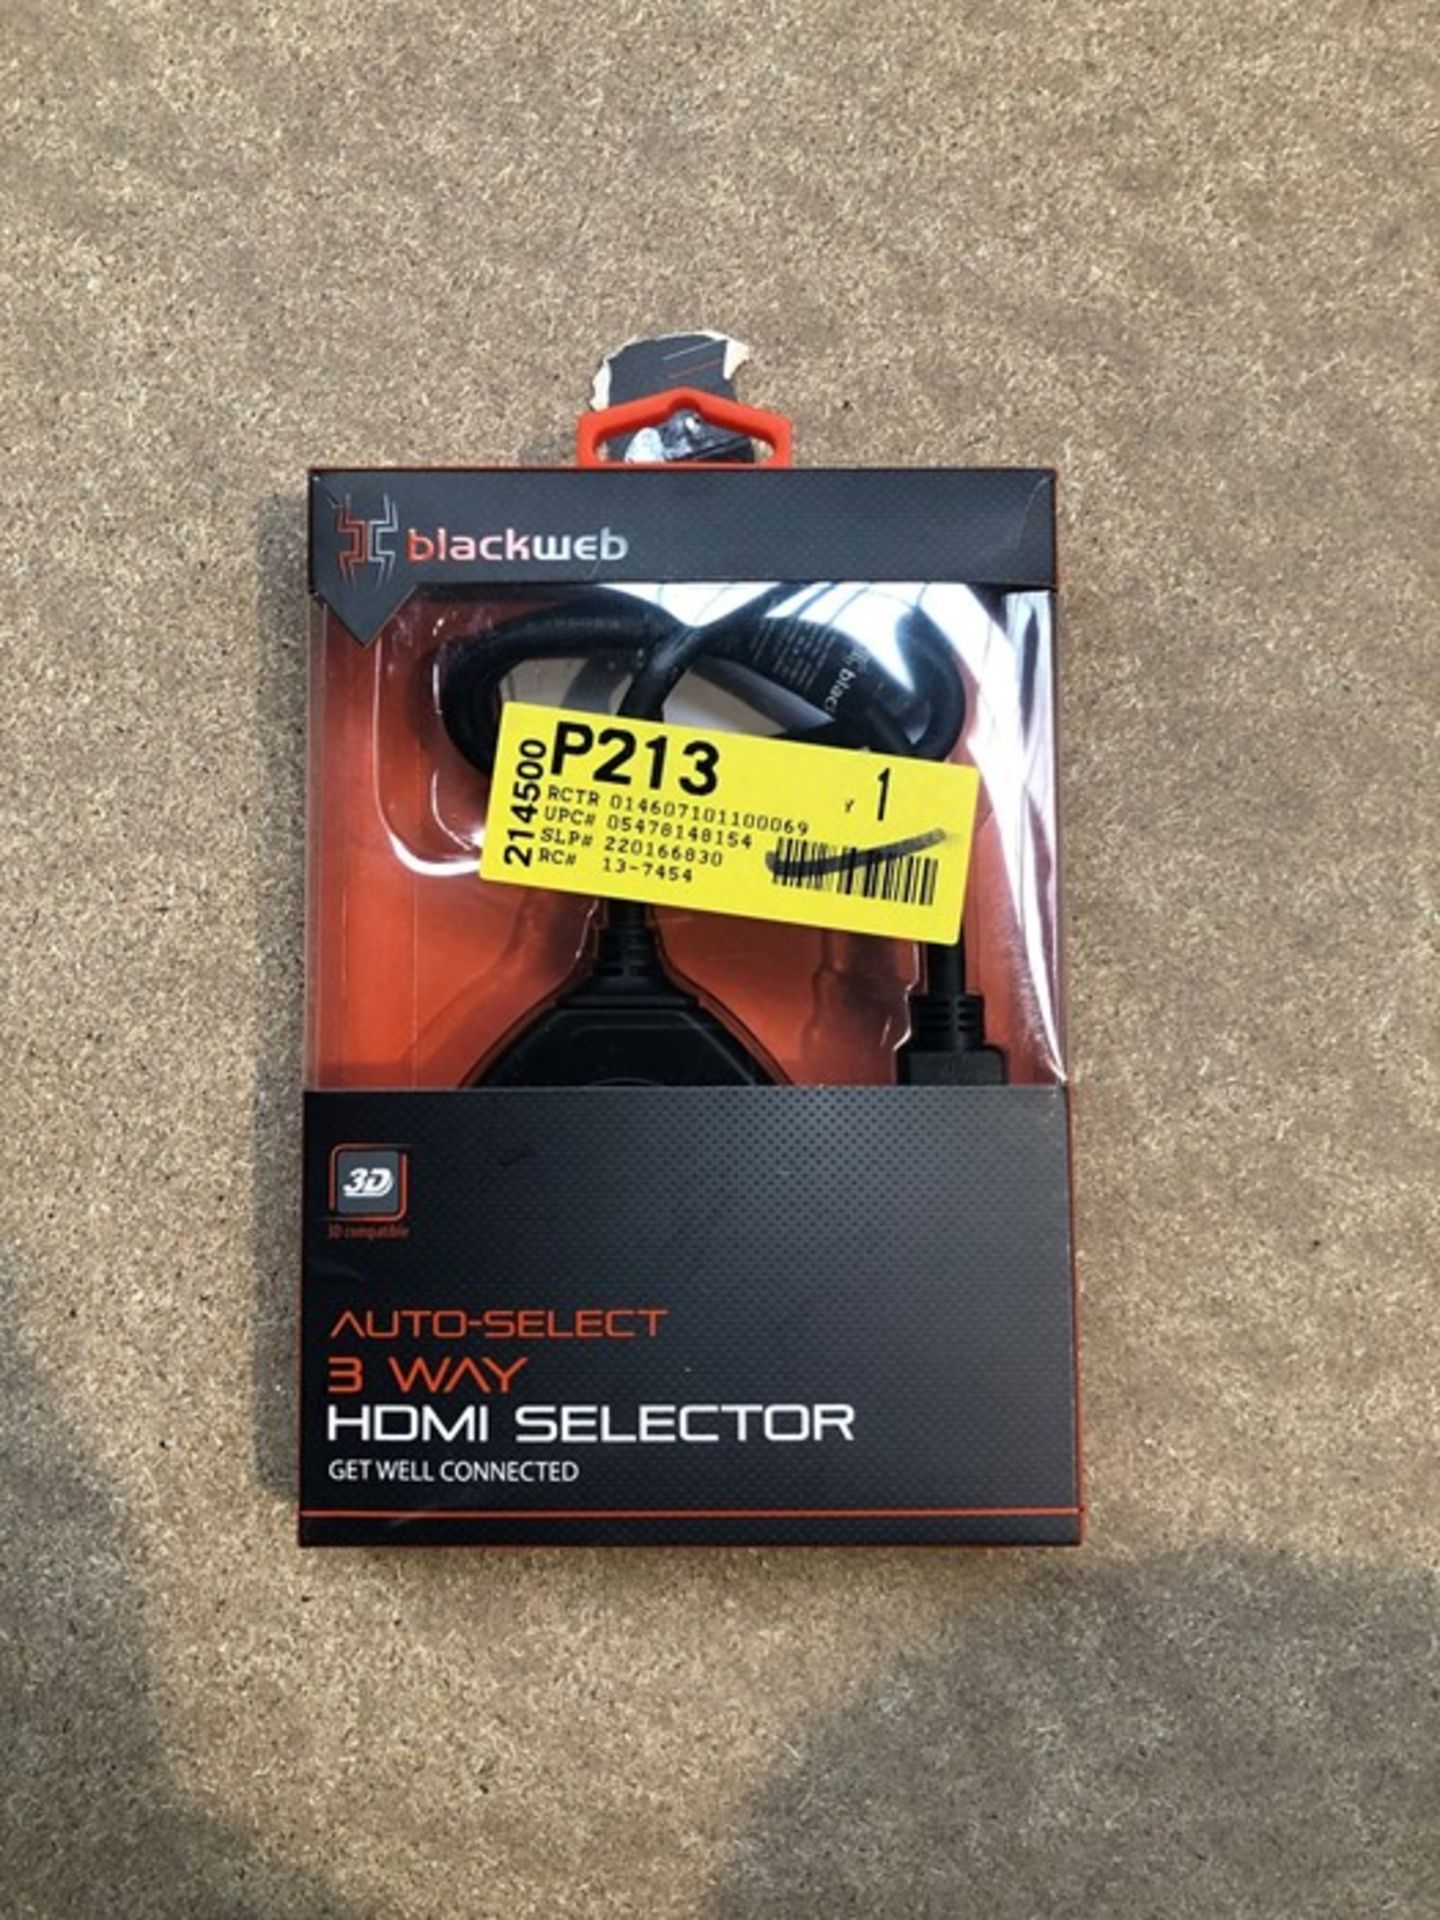 1 BOXED BLACK WEB AUTO-SELECT 3 WAY HDMI SELECTOR / RRP £26.00 - BL -4500 (VIEWING HIGHLY